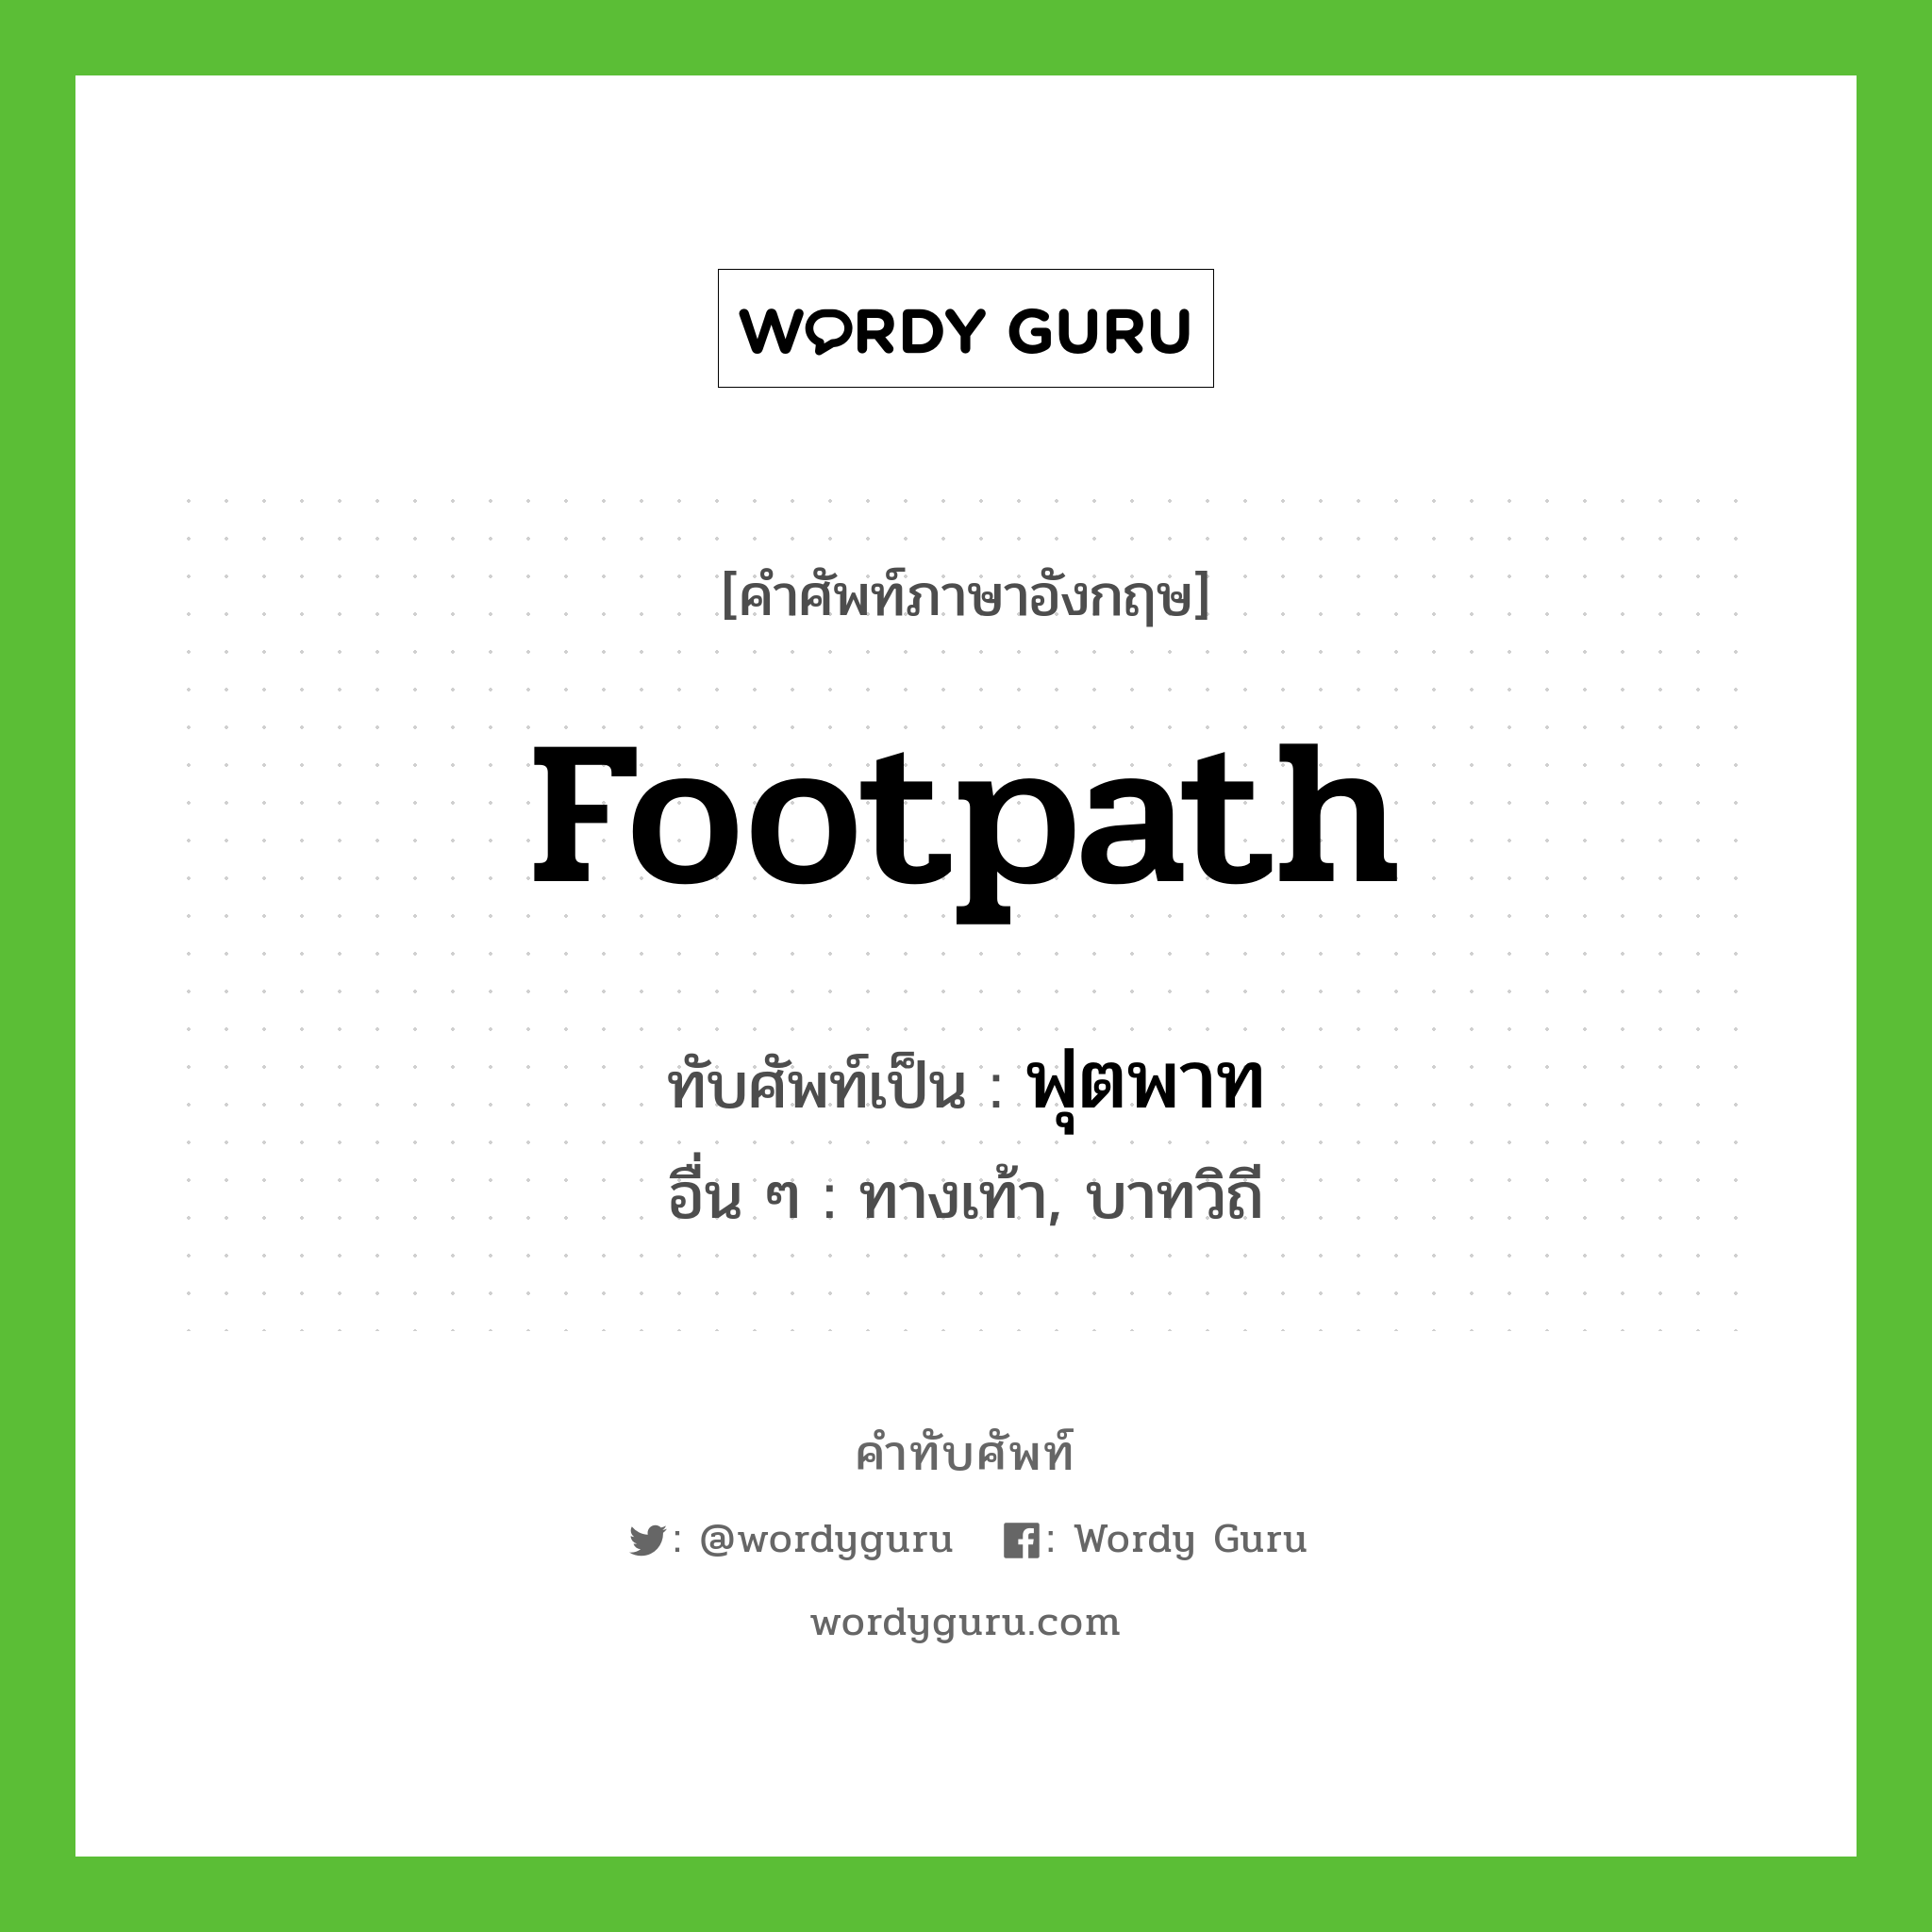 Footpath เขียนเป็นคำไทยว่าอะไร?, คำศัพท์ภาษาอังกฤษ Footpath ทับศัพท์เป็น ฟุตพาท อื่น ๆ ทางเท้า, บาทวิถี